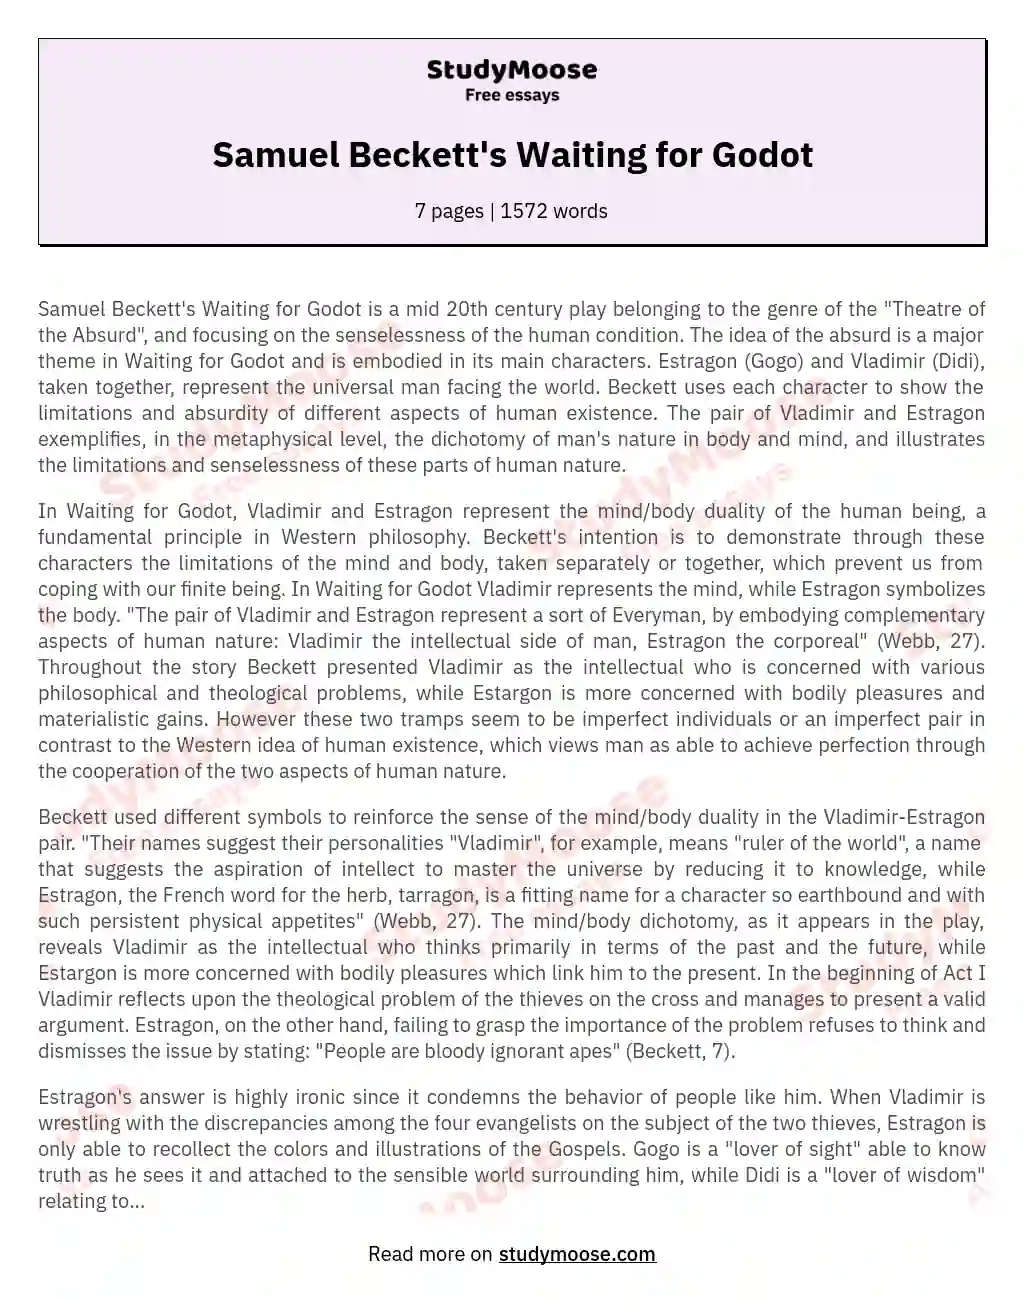 Samuel Beckett's Waiting for Godot essay